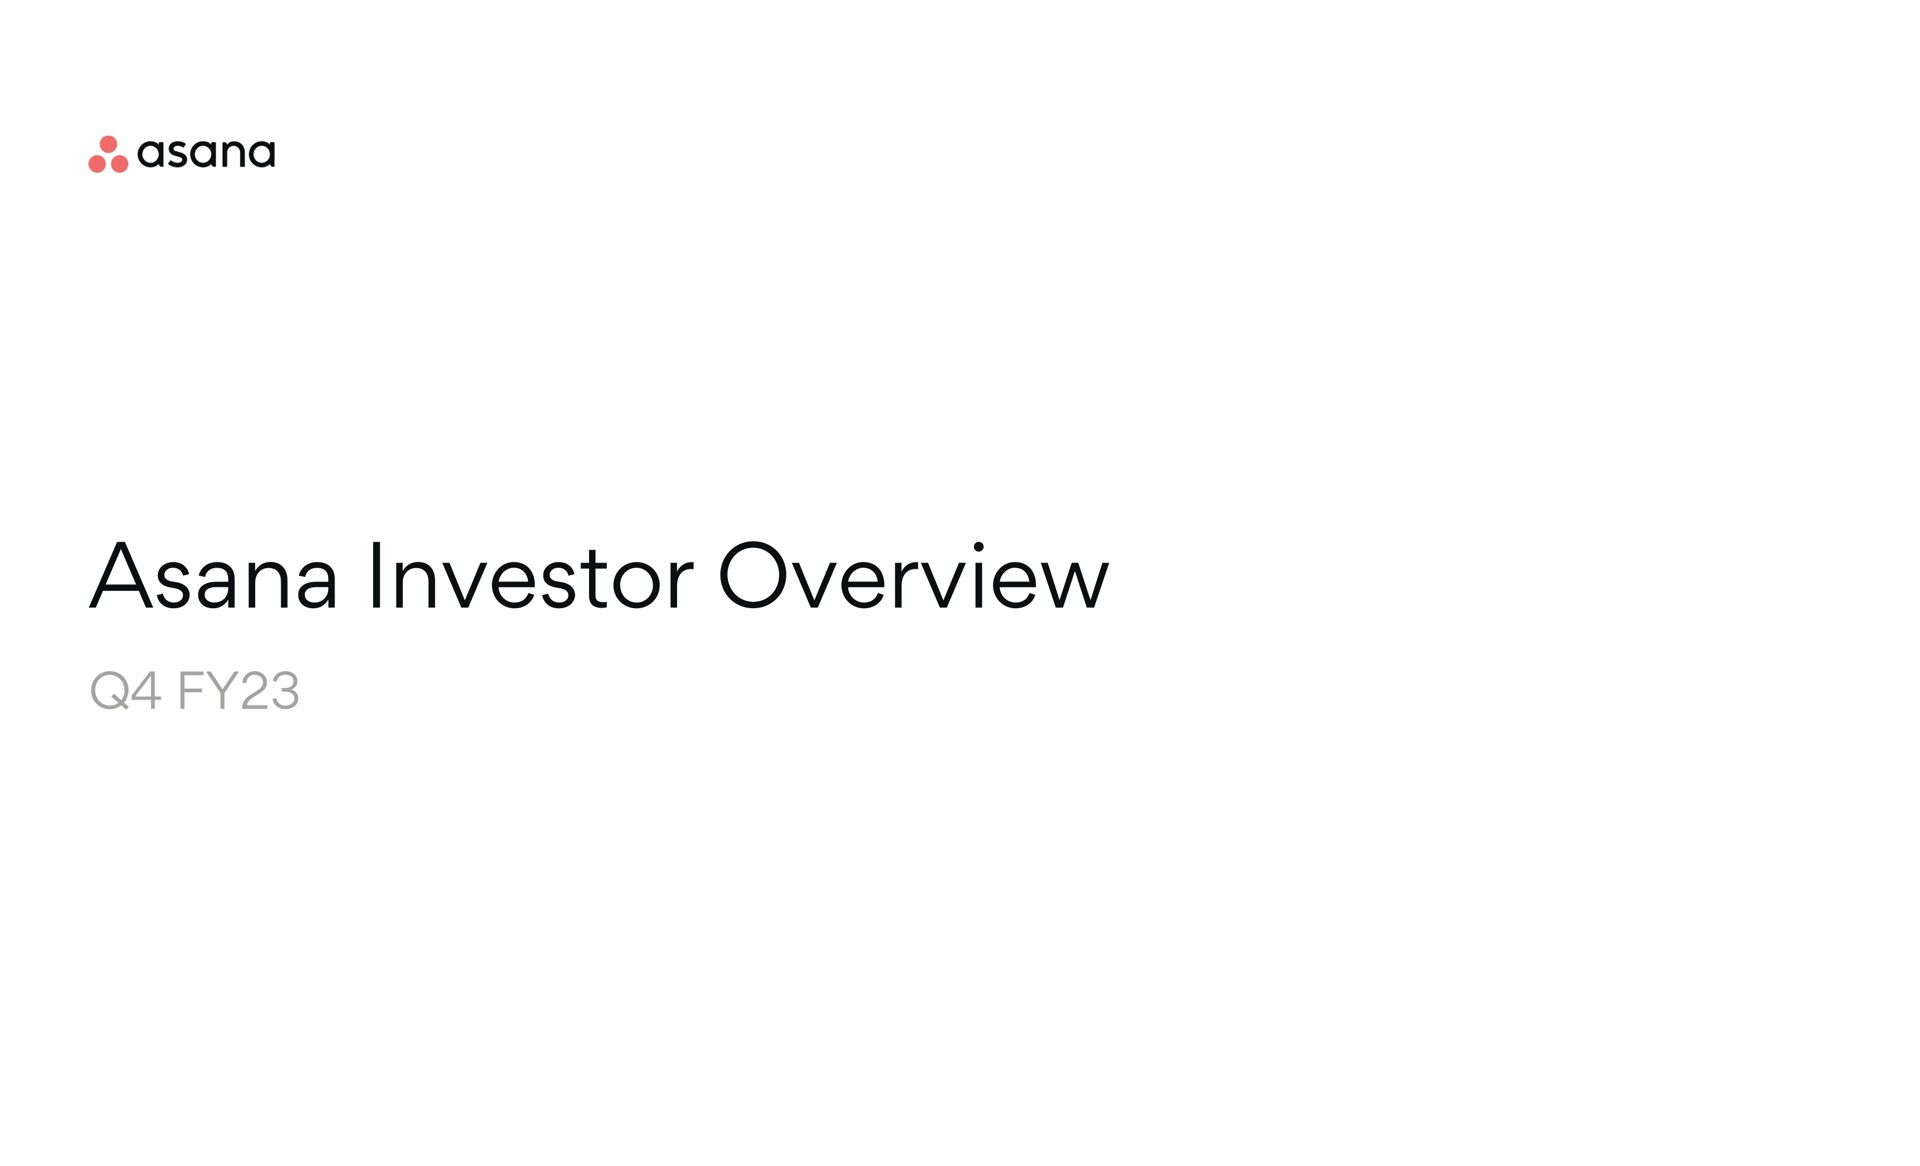 asana investor overview | Asana